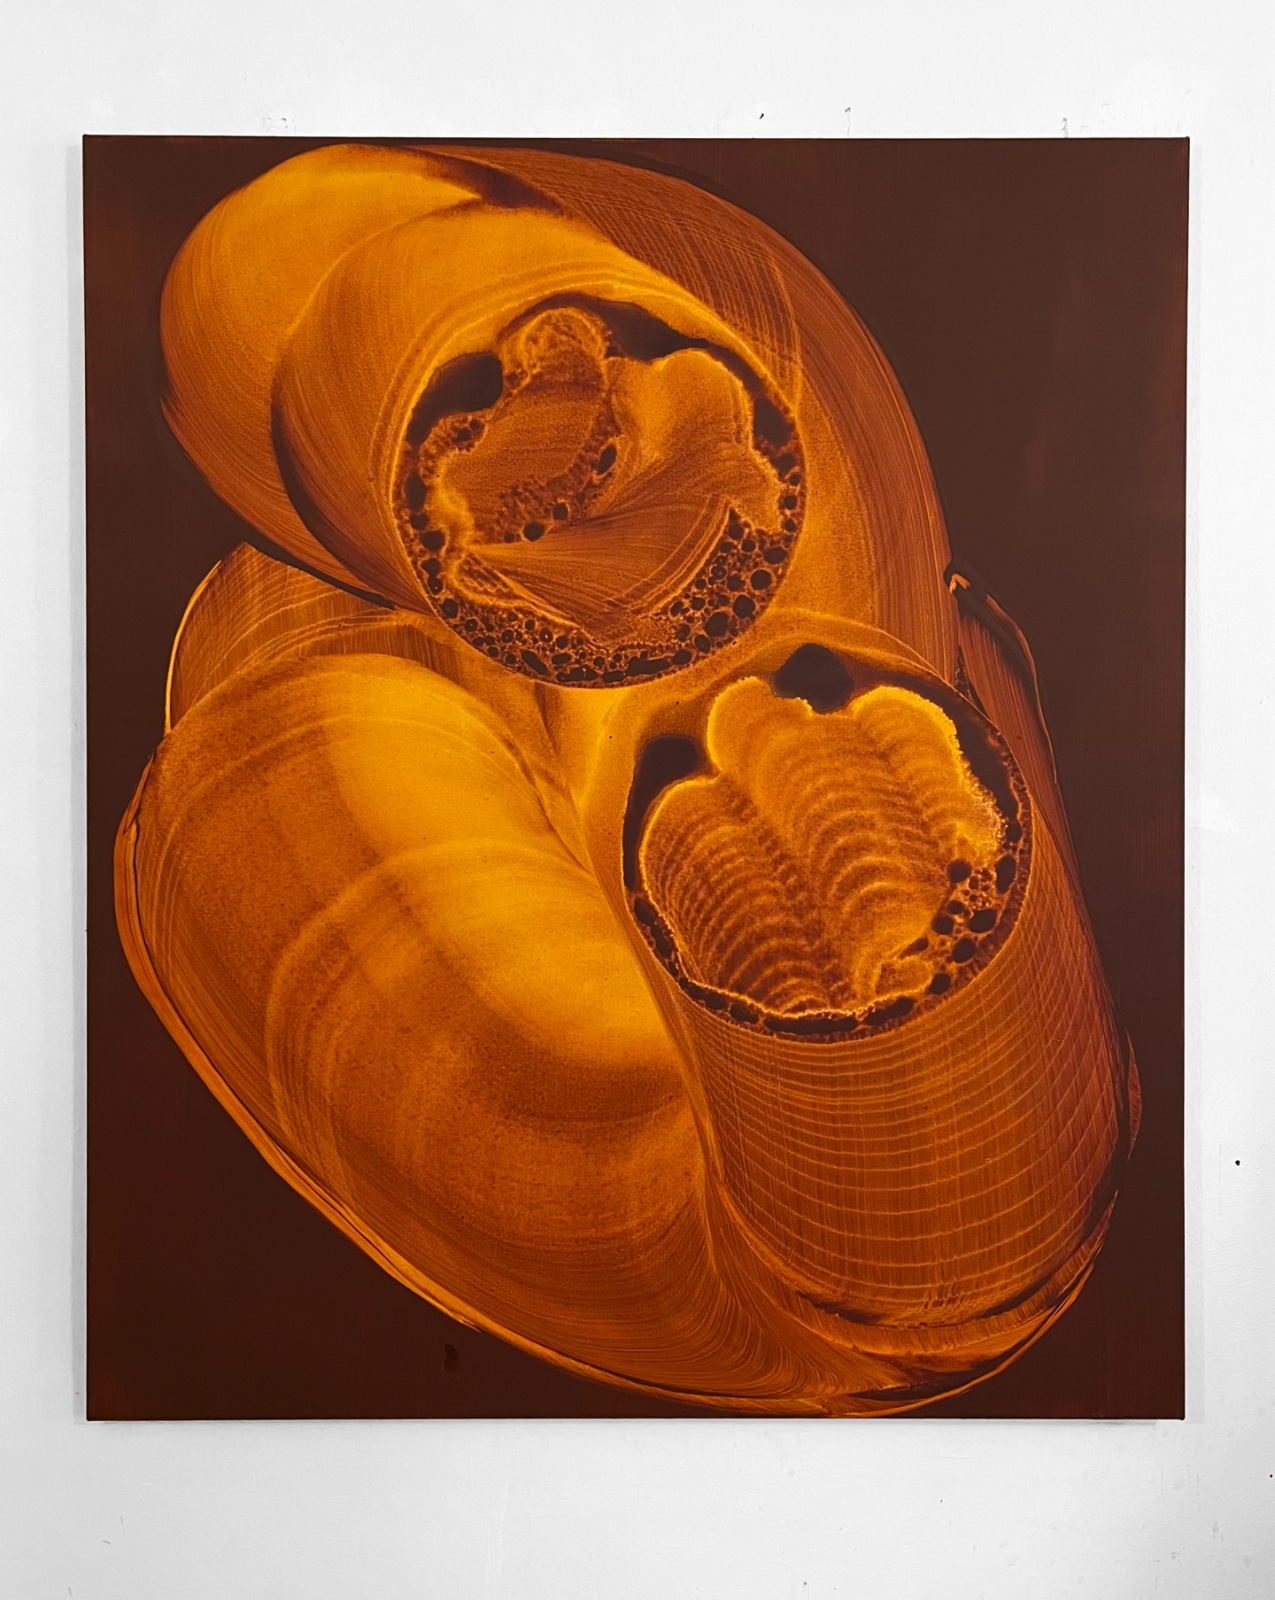 Stanislav Ondruš “They want to connect” 150 cm x 120 cm acrylic on canvas 2023